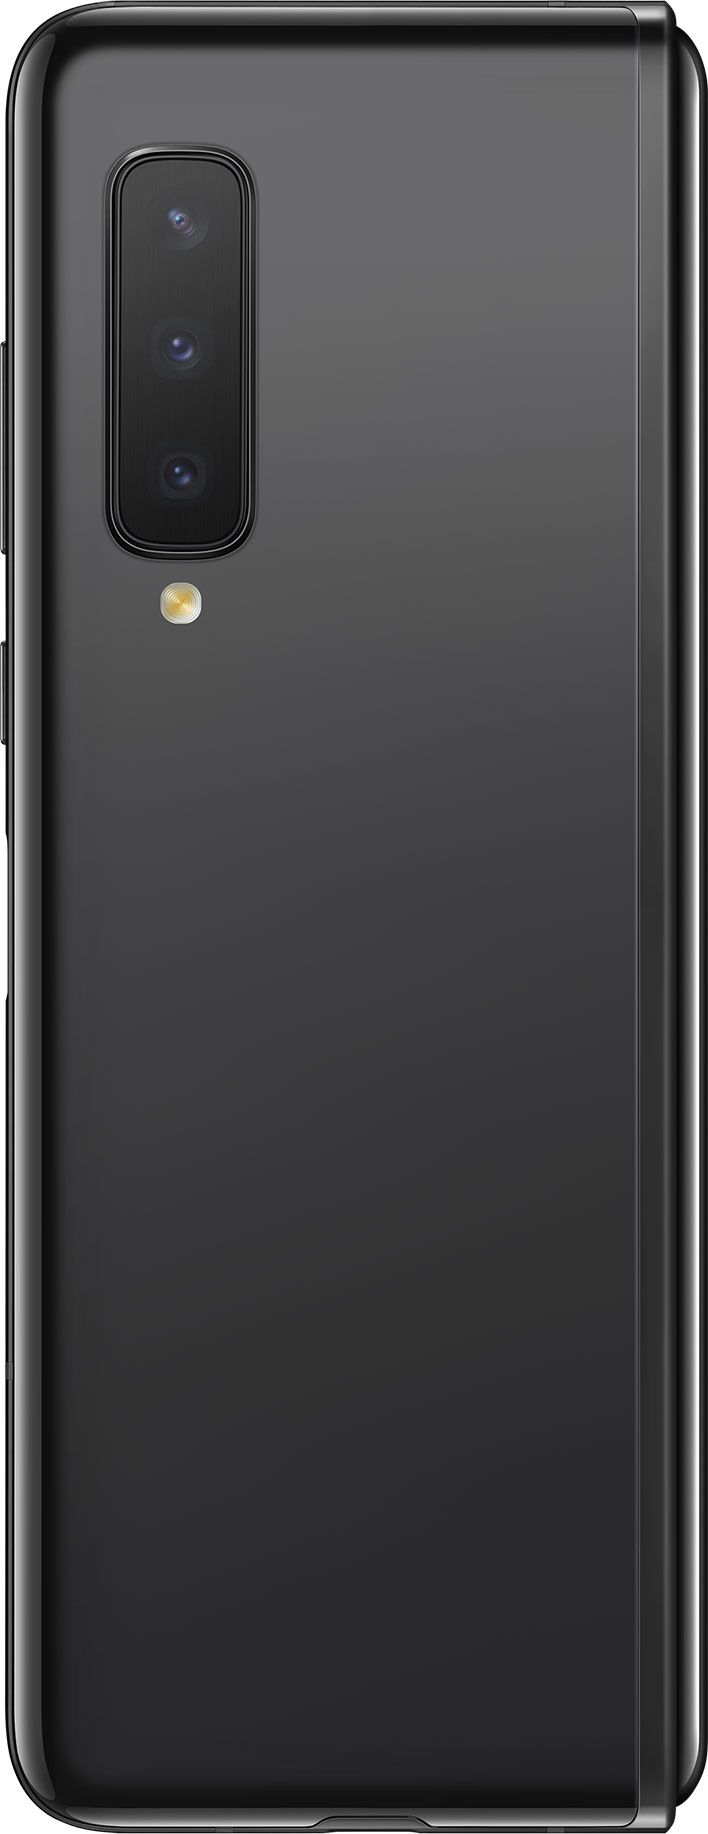 Акция на Смартфон Samsung Galaxy Fold 12/512Gb (SM-F900FZKD) Cosmos Black от Територія твоєї техніки - 6